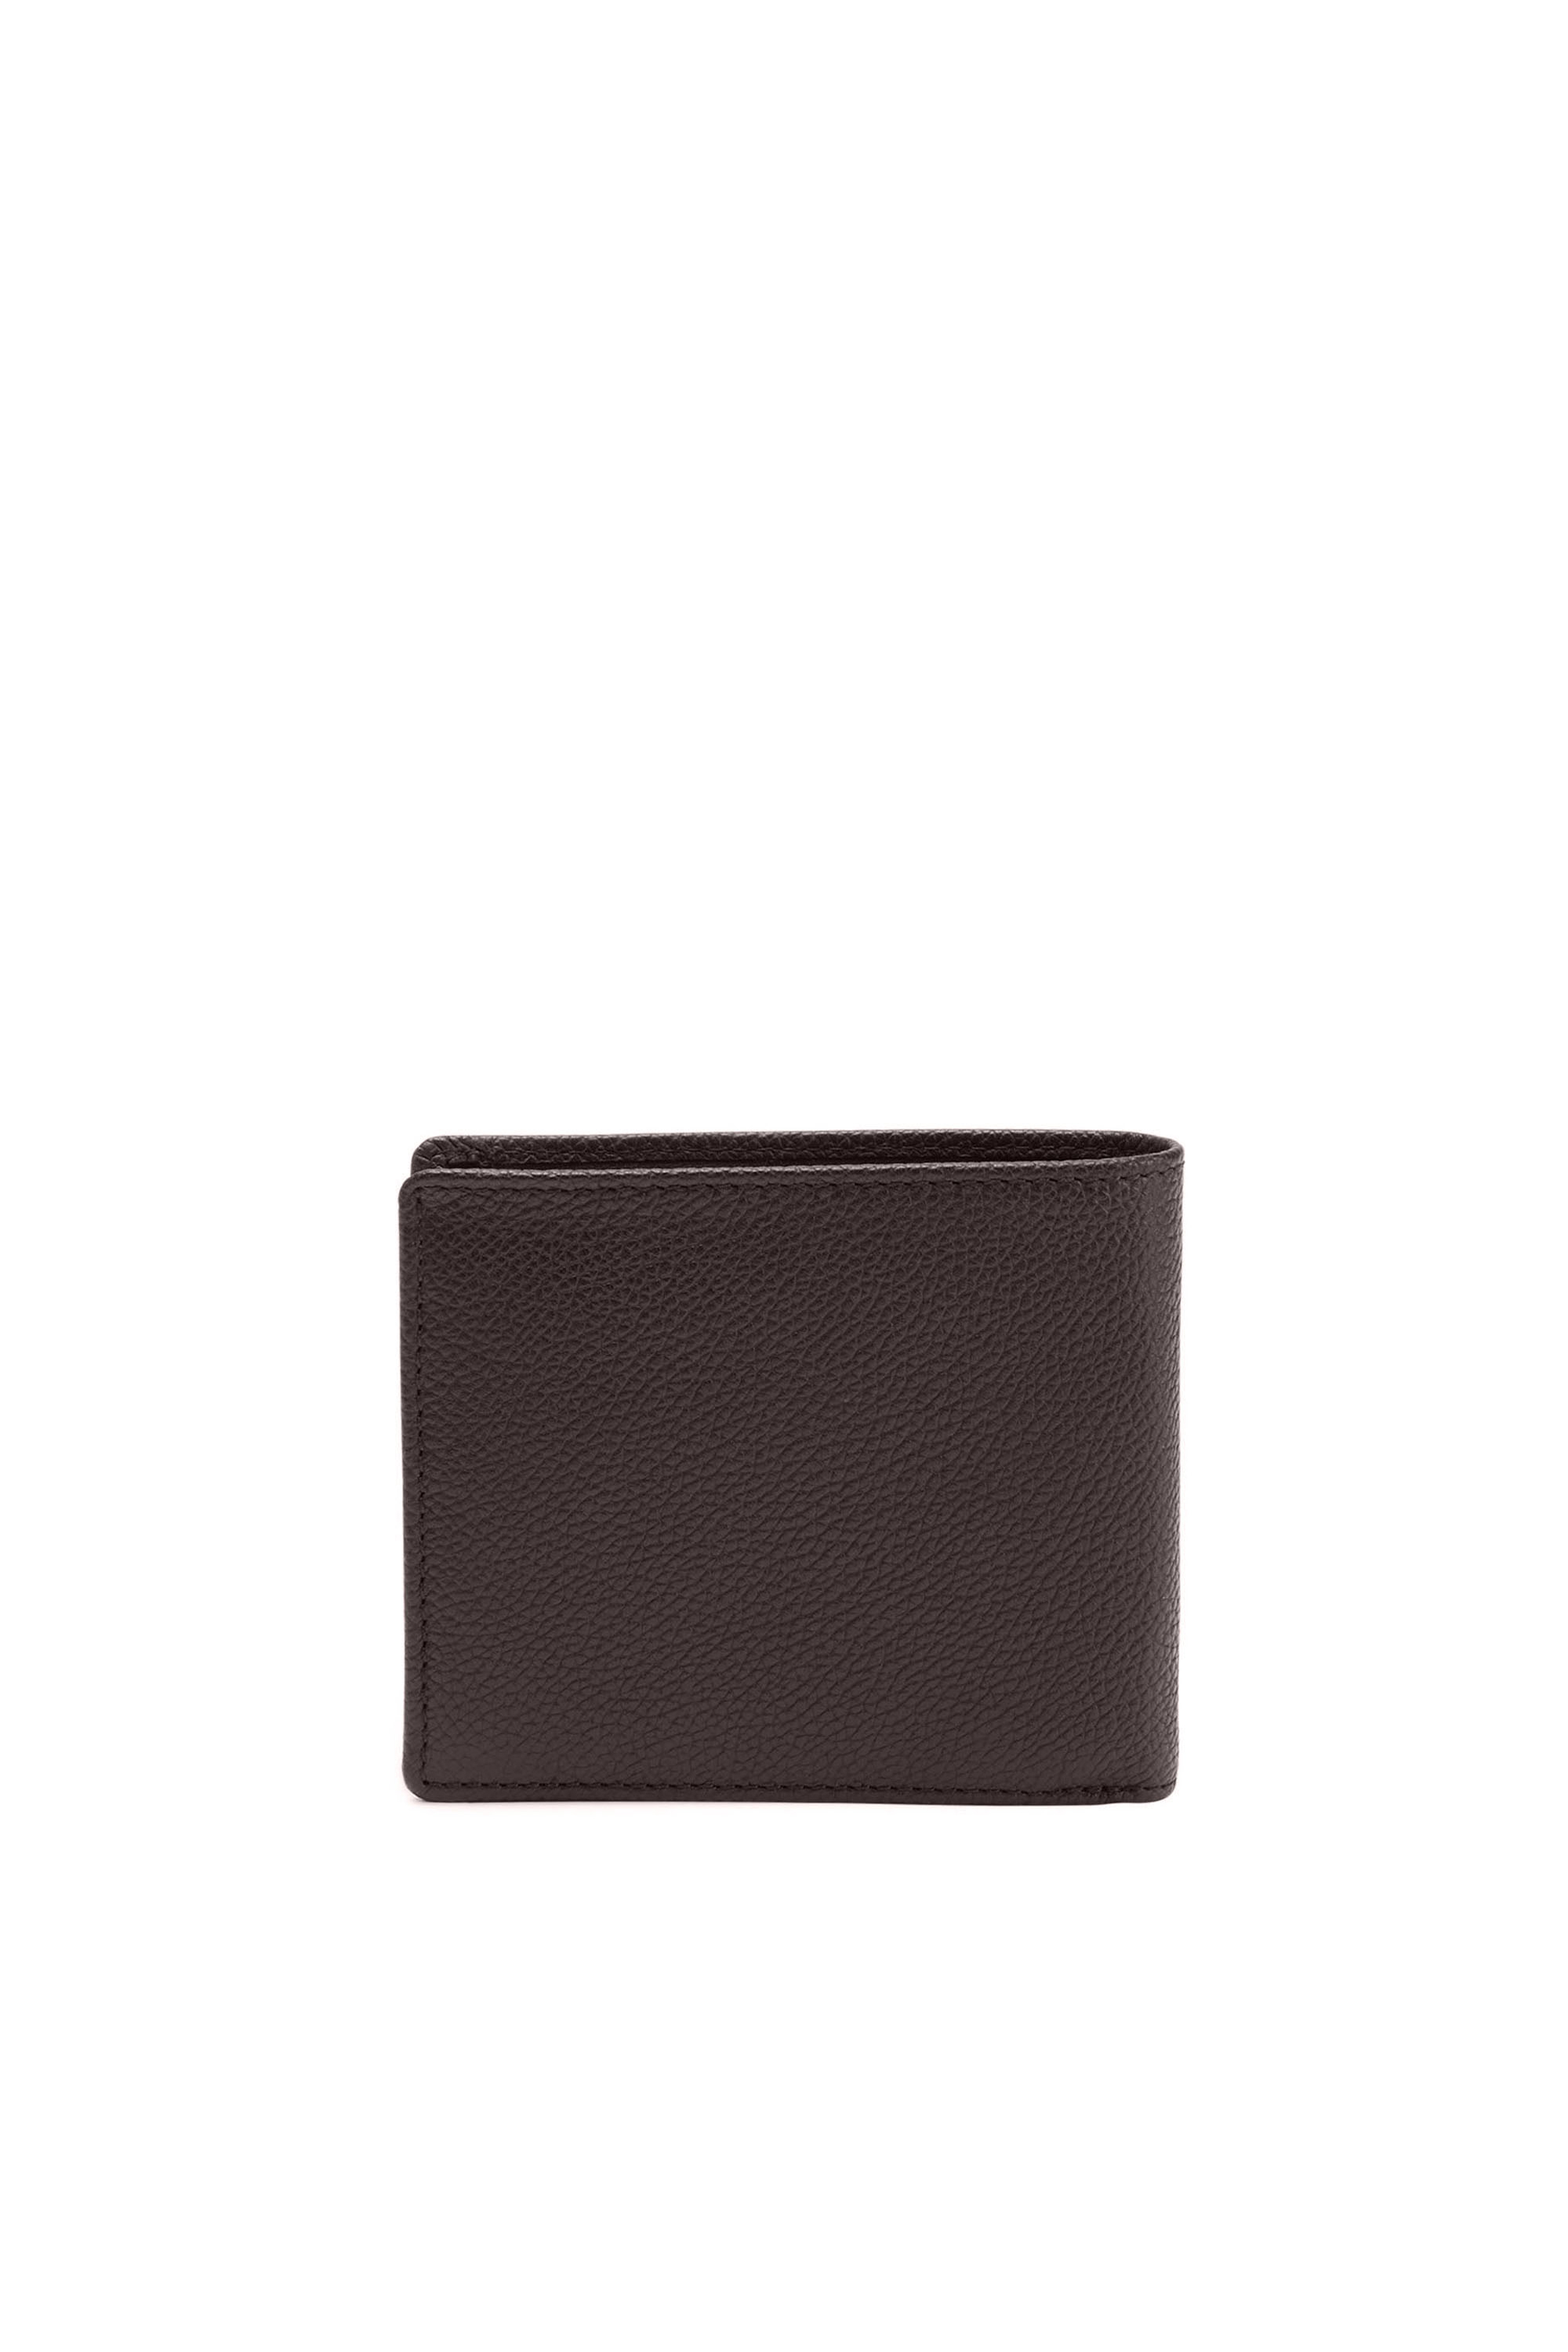 Diesel - BI FOLD COIN S, Man Bi-fold wallet in grainy leather in Brown - Image 2